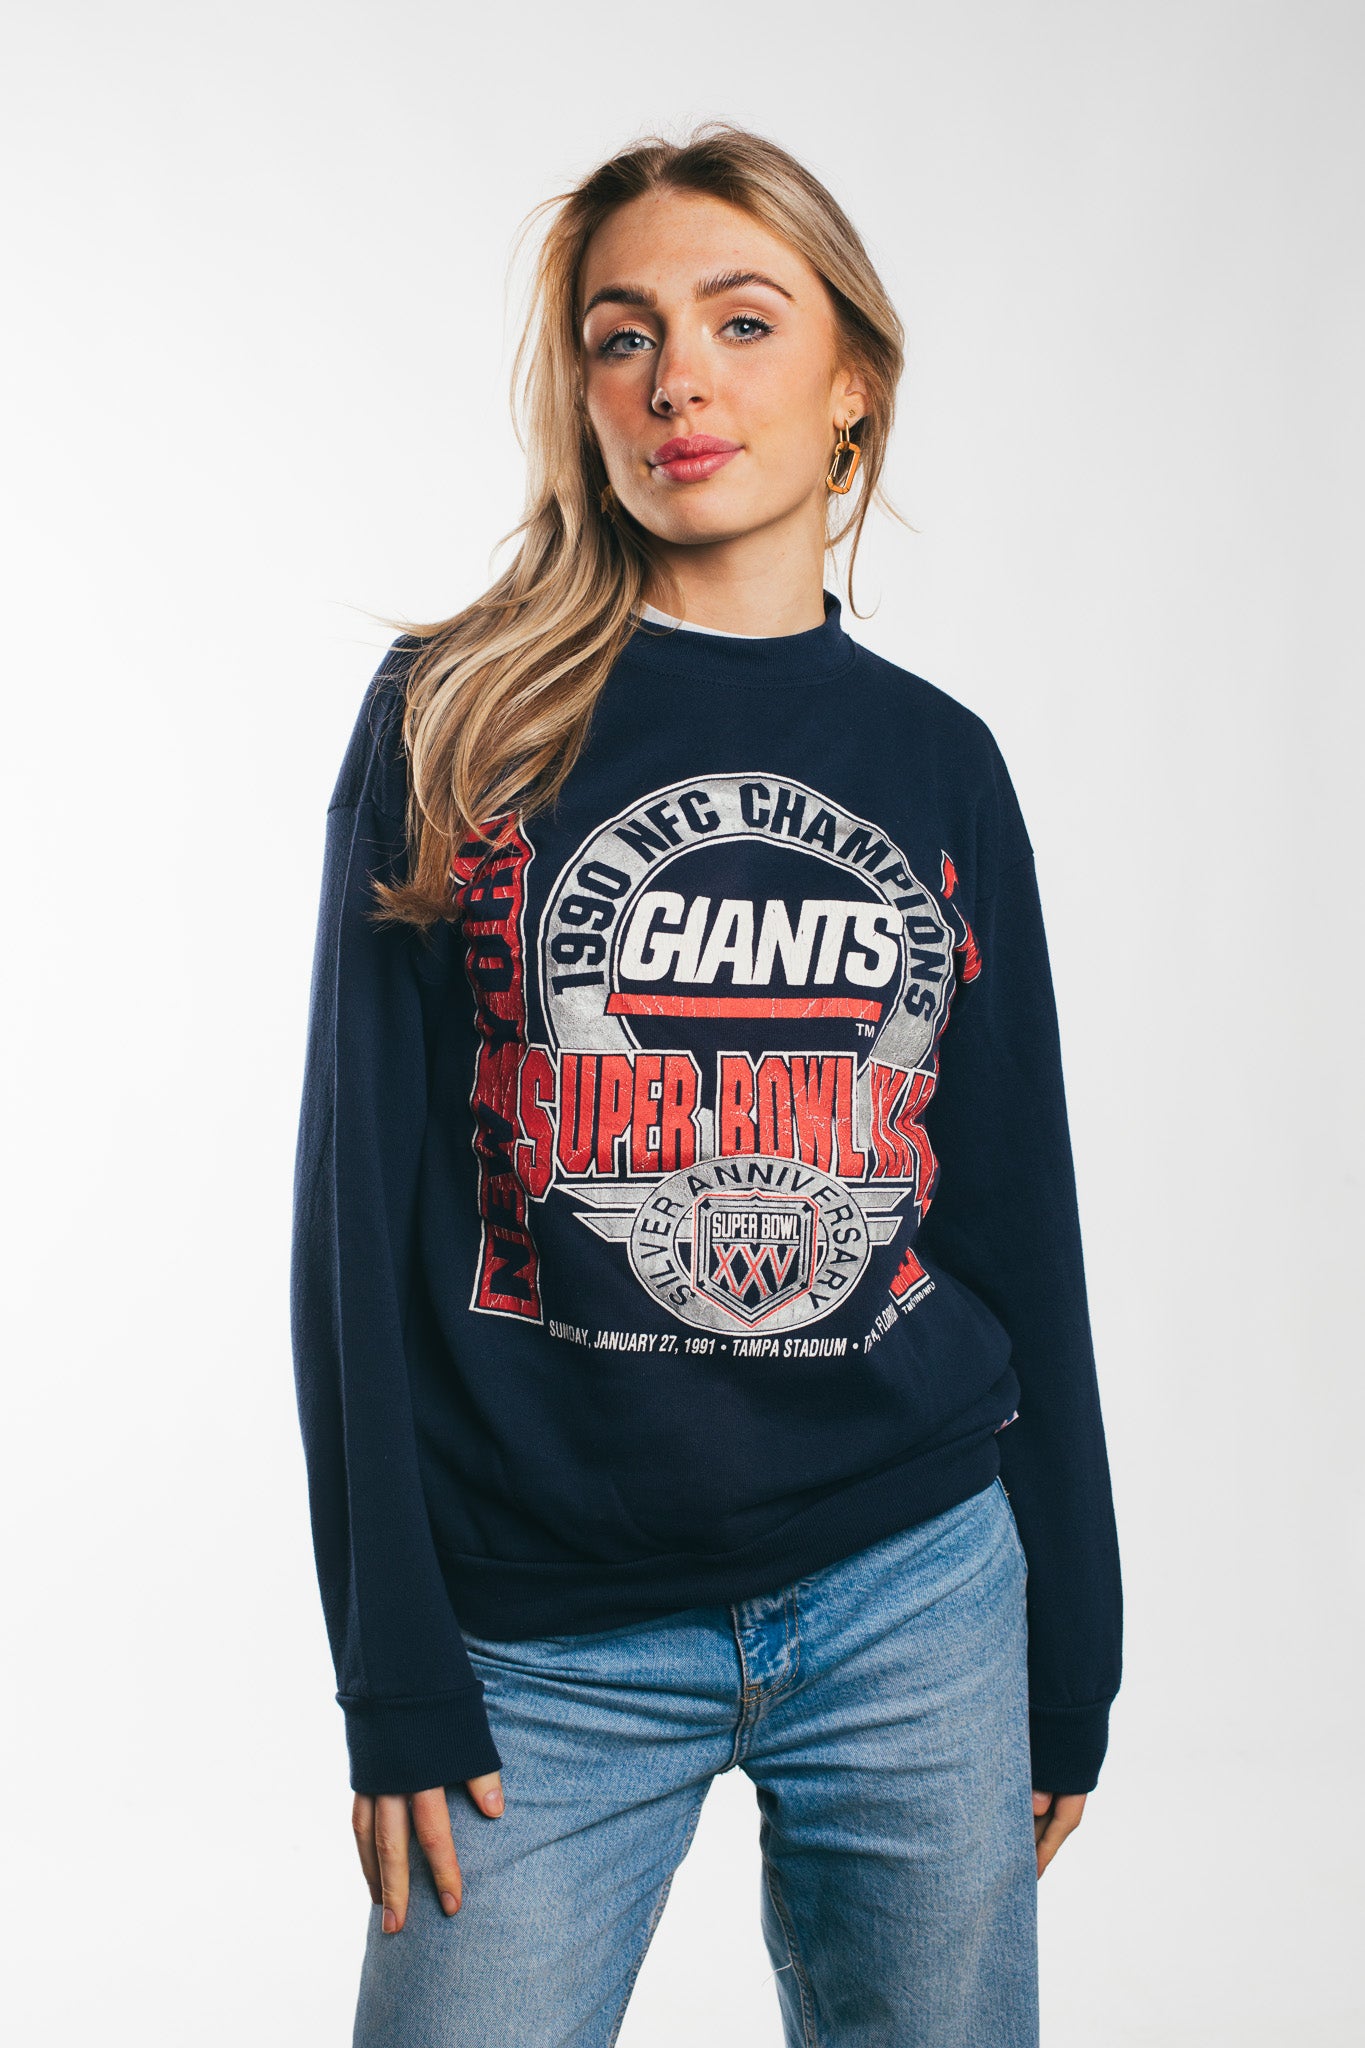 Super Bowl Champions - Sweatshirt (S)